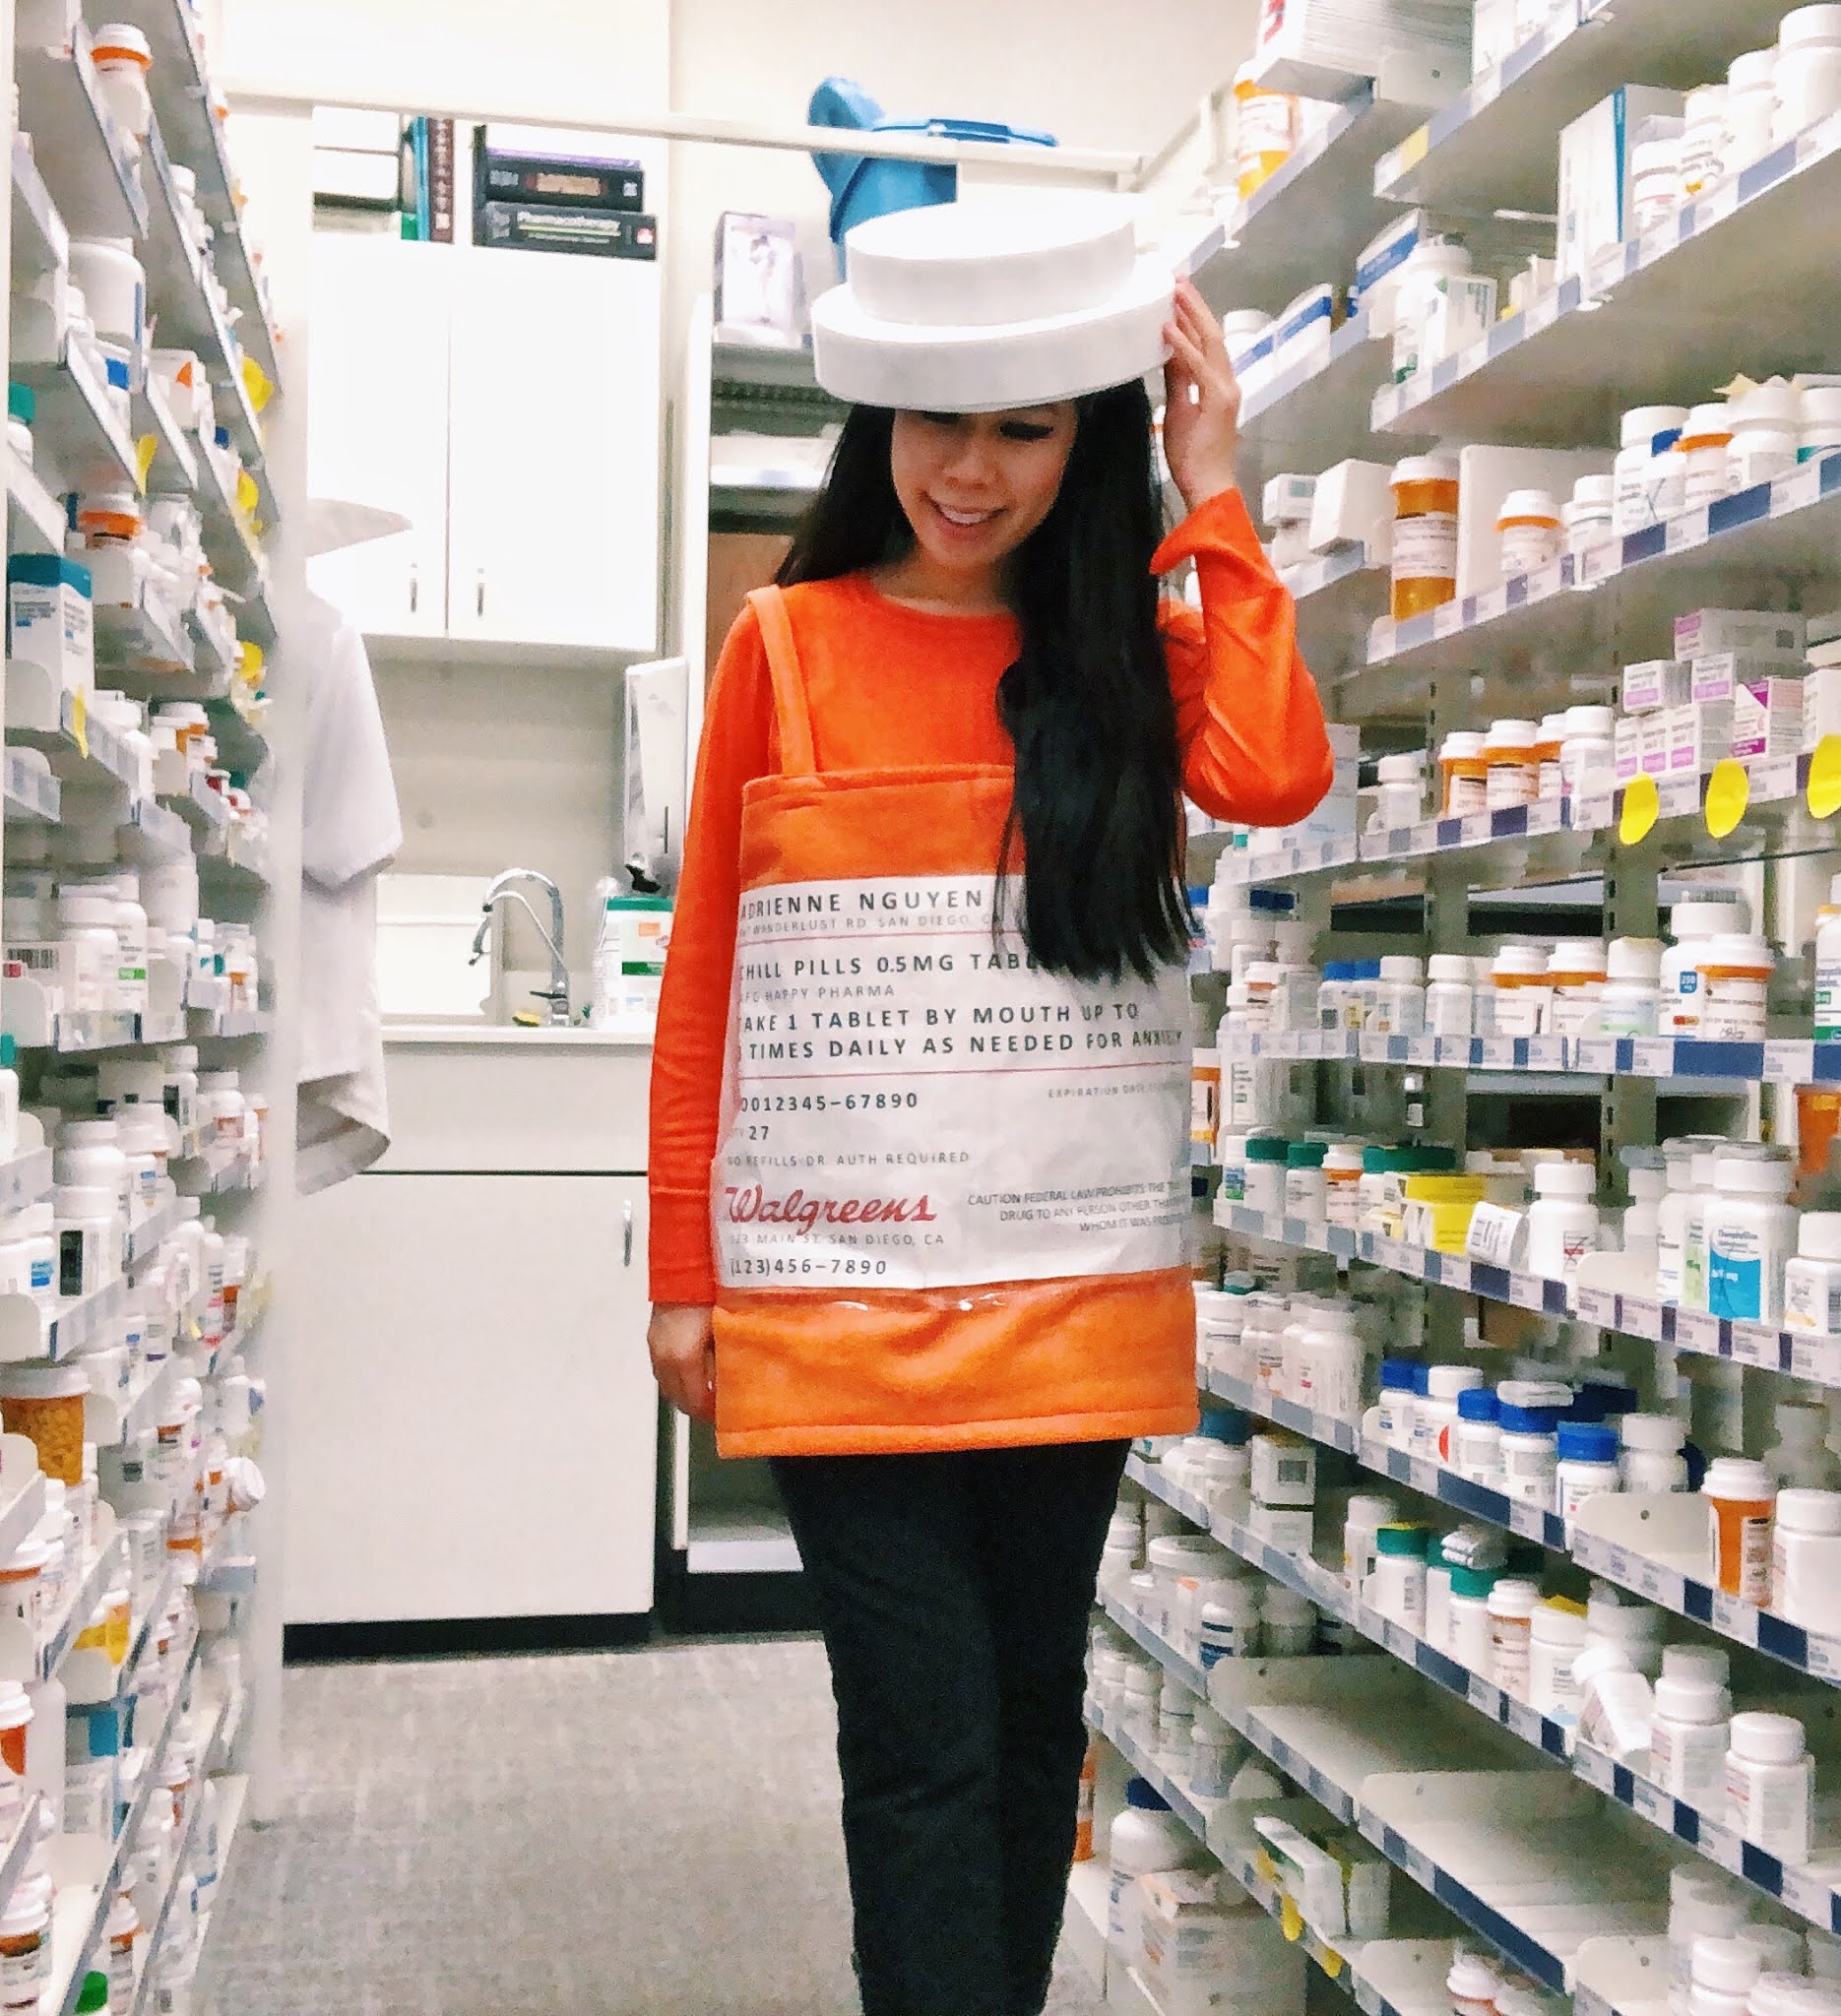 Adrienne Nguyen Pharmacist_ Walgreens PharmD_What a Pharmacist should Wear on Halloween